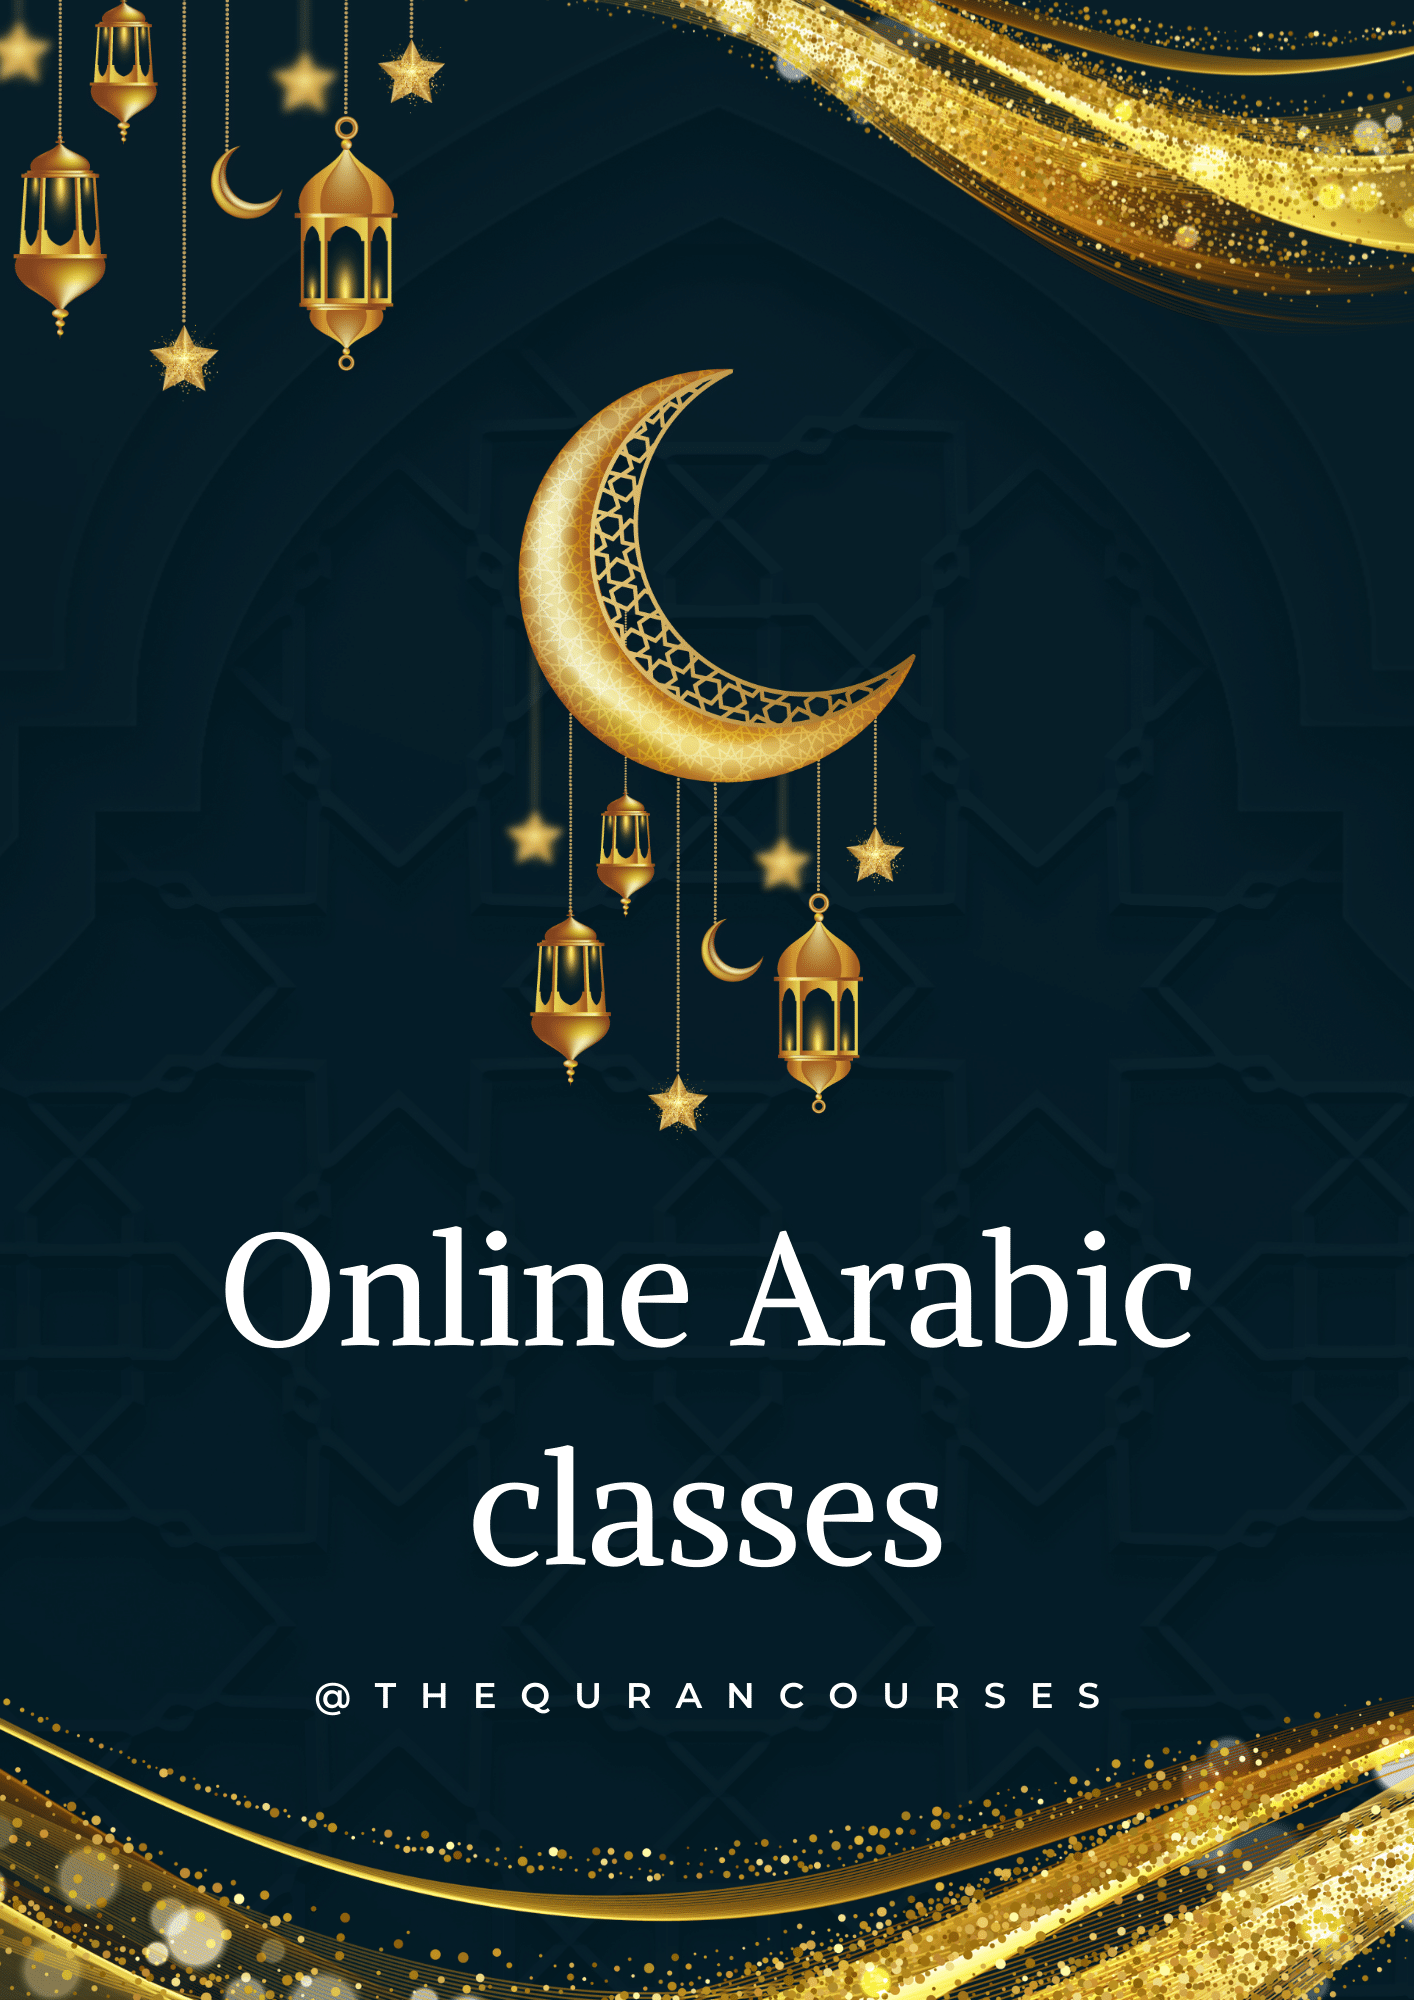 Online Arabic classes